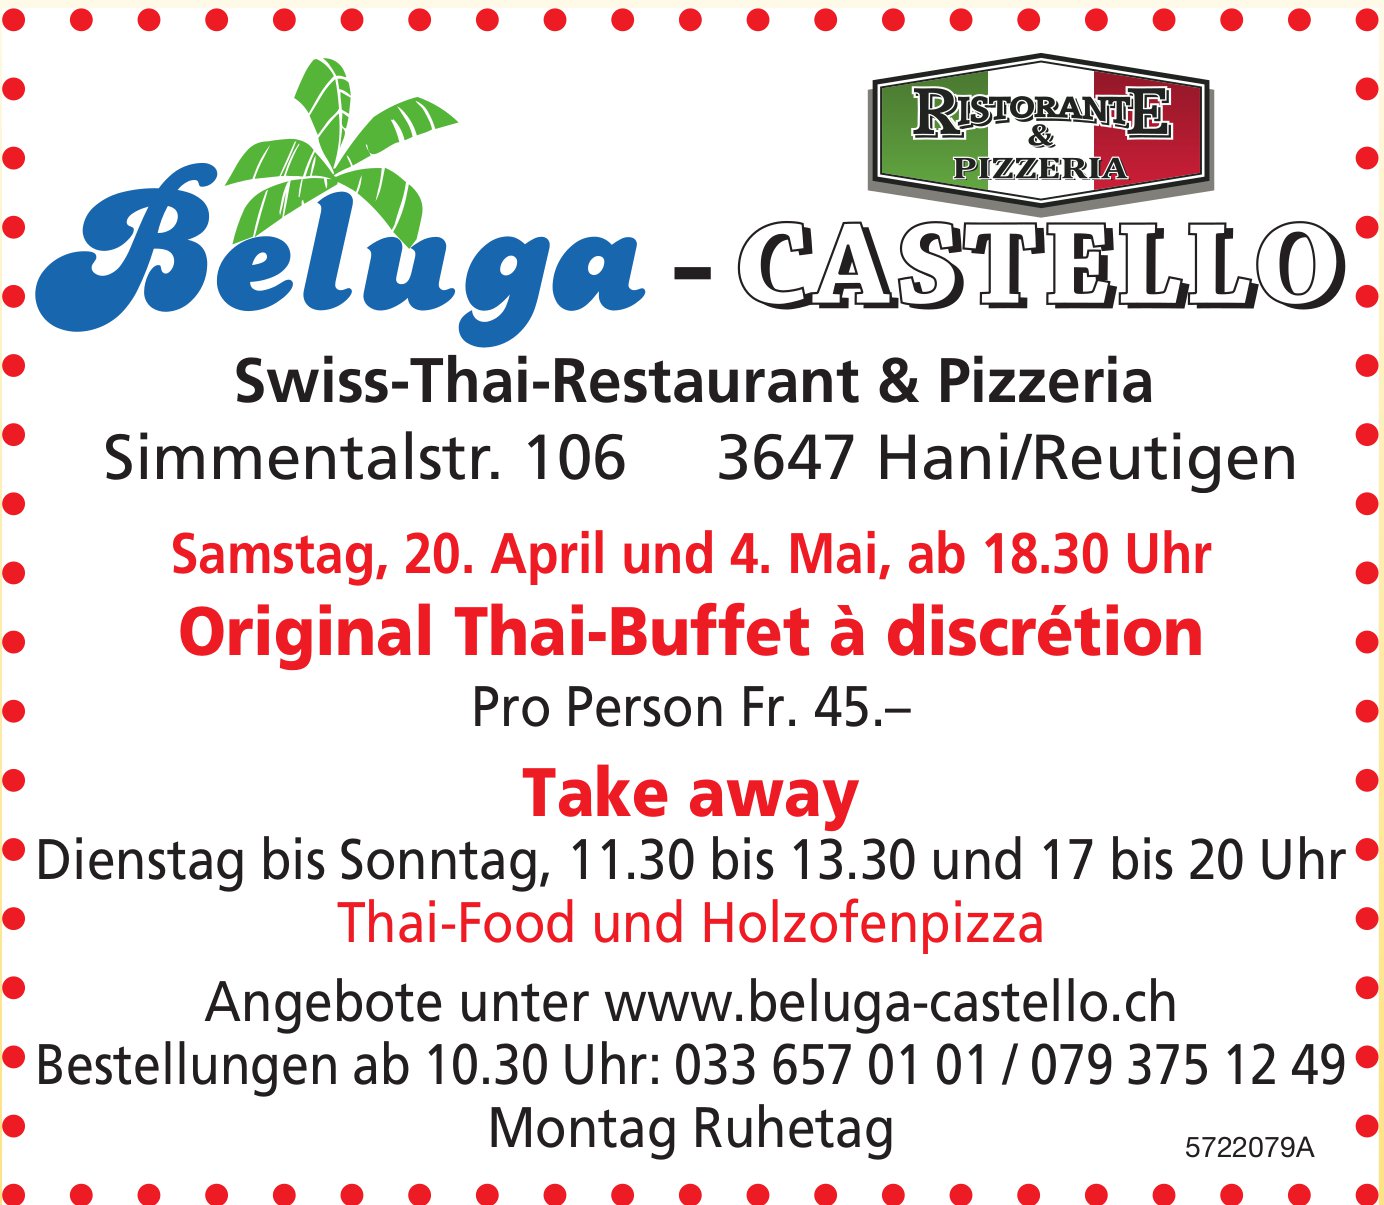 Original Thai-Buffet à discrétion & Take away, 20. - 4. April, Swiss-Thai-Restaurant & Pizzeria Beluga-Castello, Hani/Reutigen